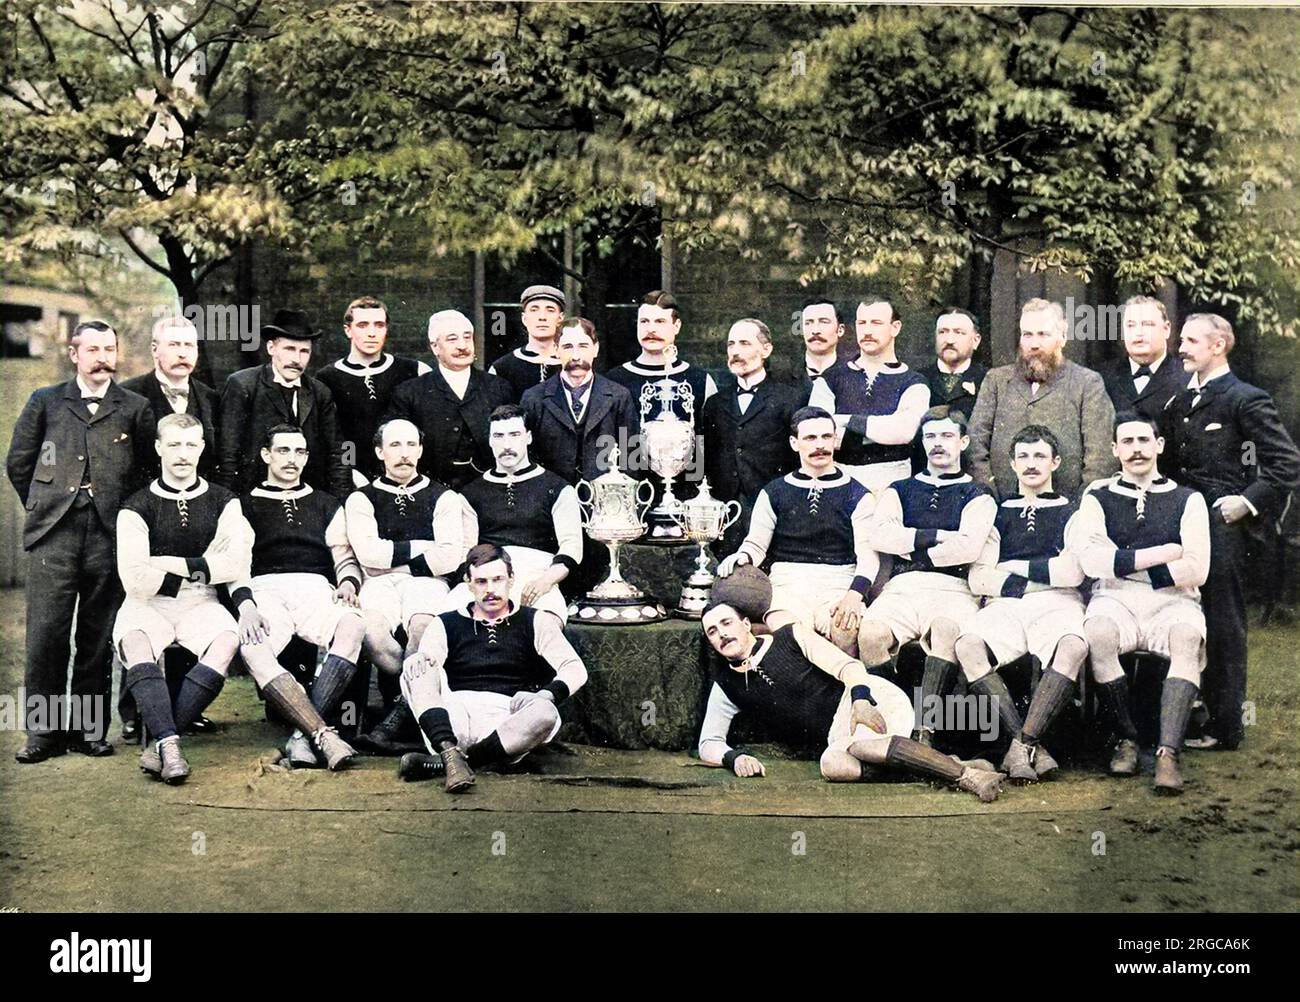 Aston Villa Football Club, con la squadra per la stagione 1896-1897. La fotografia mostra: Riga posteriore, da sinistra a destra: G.B. Ramsay (Segretario), Dr. V.A. Jones, J.Grierson (Trainer), H.Spencer, F.Cooper, T.Wilkes, J. Ansell (Presidente), D. Hodgetts, J.E. Margoschis (Presidente), C.S. Johnstone, J. Welford, I. Whitehouse, W. McGregor, J.T. Lees, F.W. Rinder (Rinder). Fila centrale, seduta, da sinistra a destra: R. Chatt, J.W. Crabtree, J. Reynolds, Jas. Cowan, J. Devey (Capitano), F. Burton, D. Athersmith, J. Campbell. Prima fila, a terra, da sinistra a destra: S. Smith, John Cowan. Foto Stock